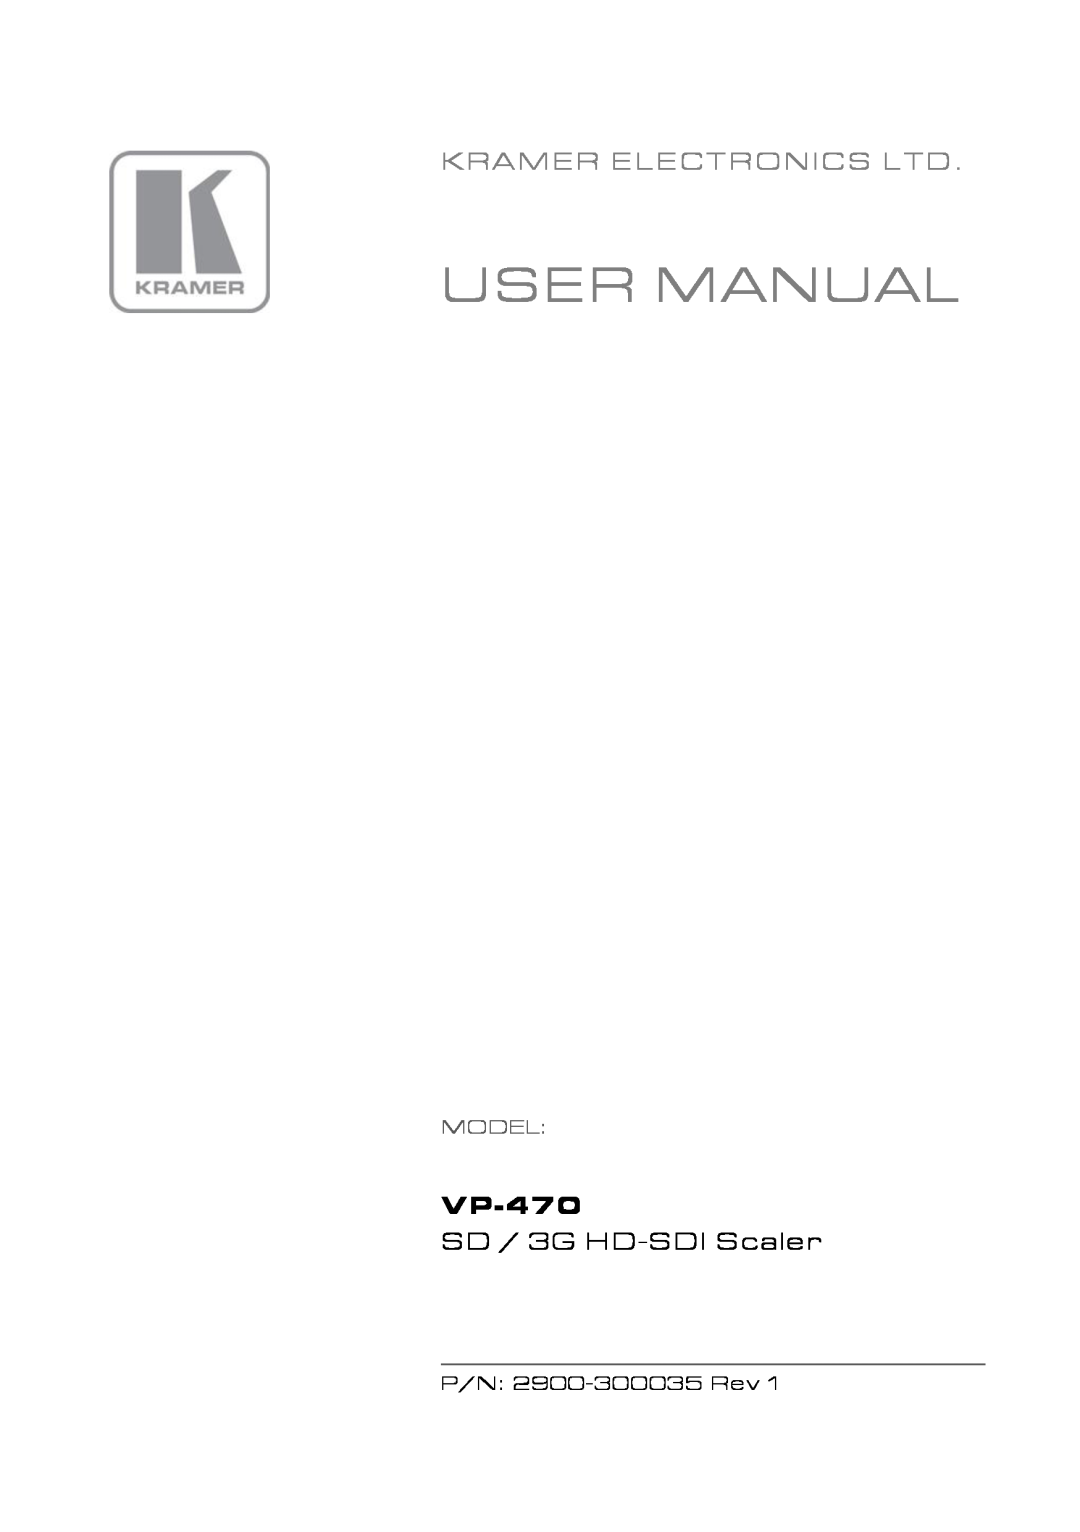 Kramer Electronics VP-470 user manual User Manual, SD / 3G HD-SDI Scaler, Model 